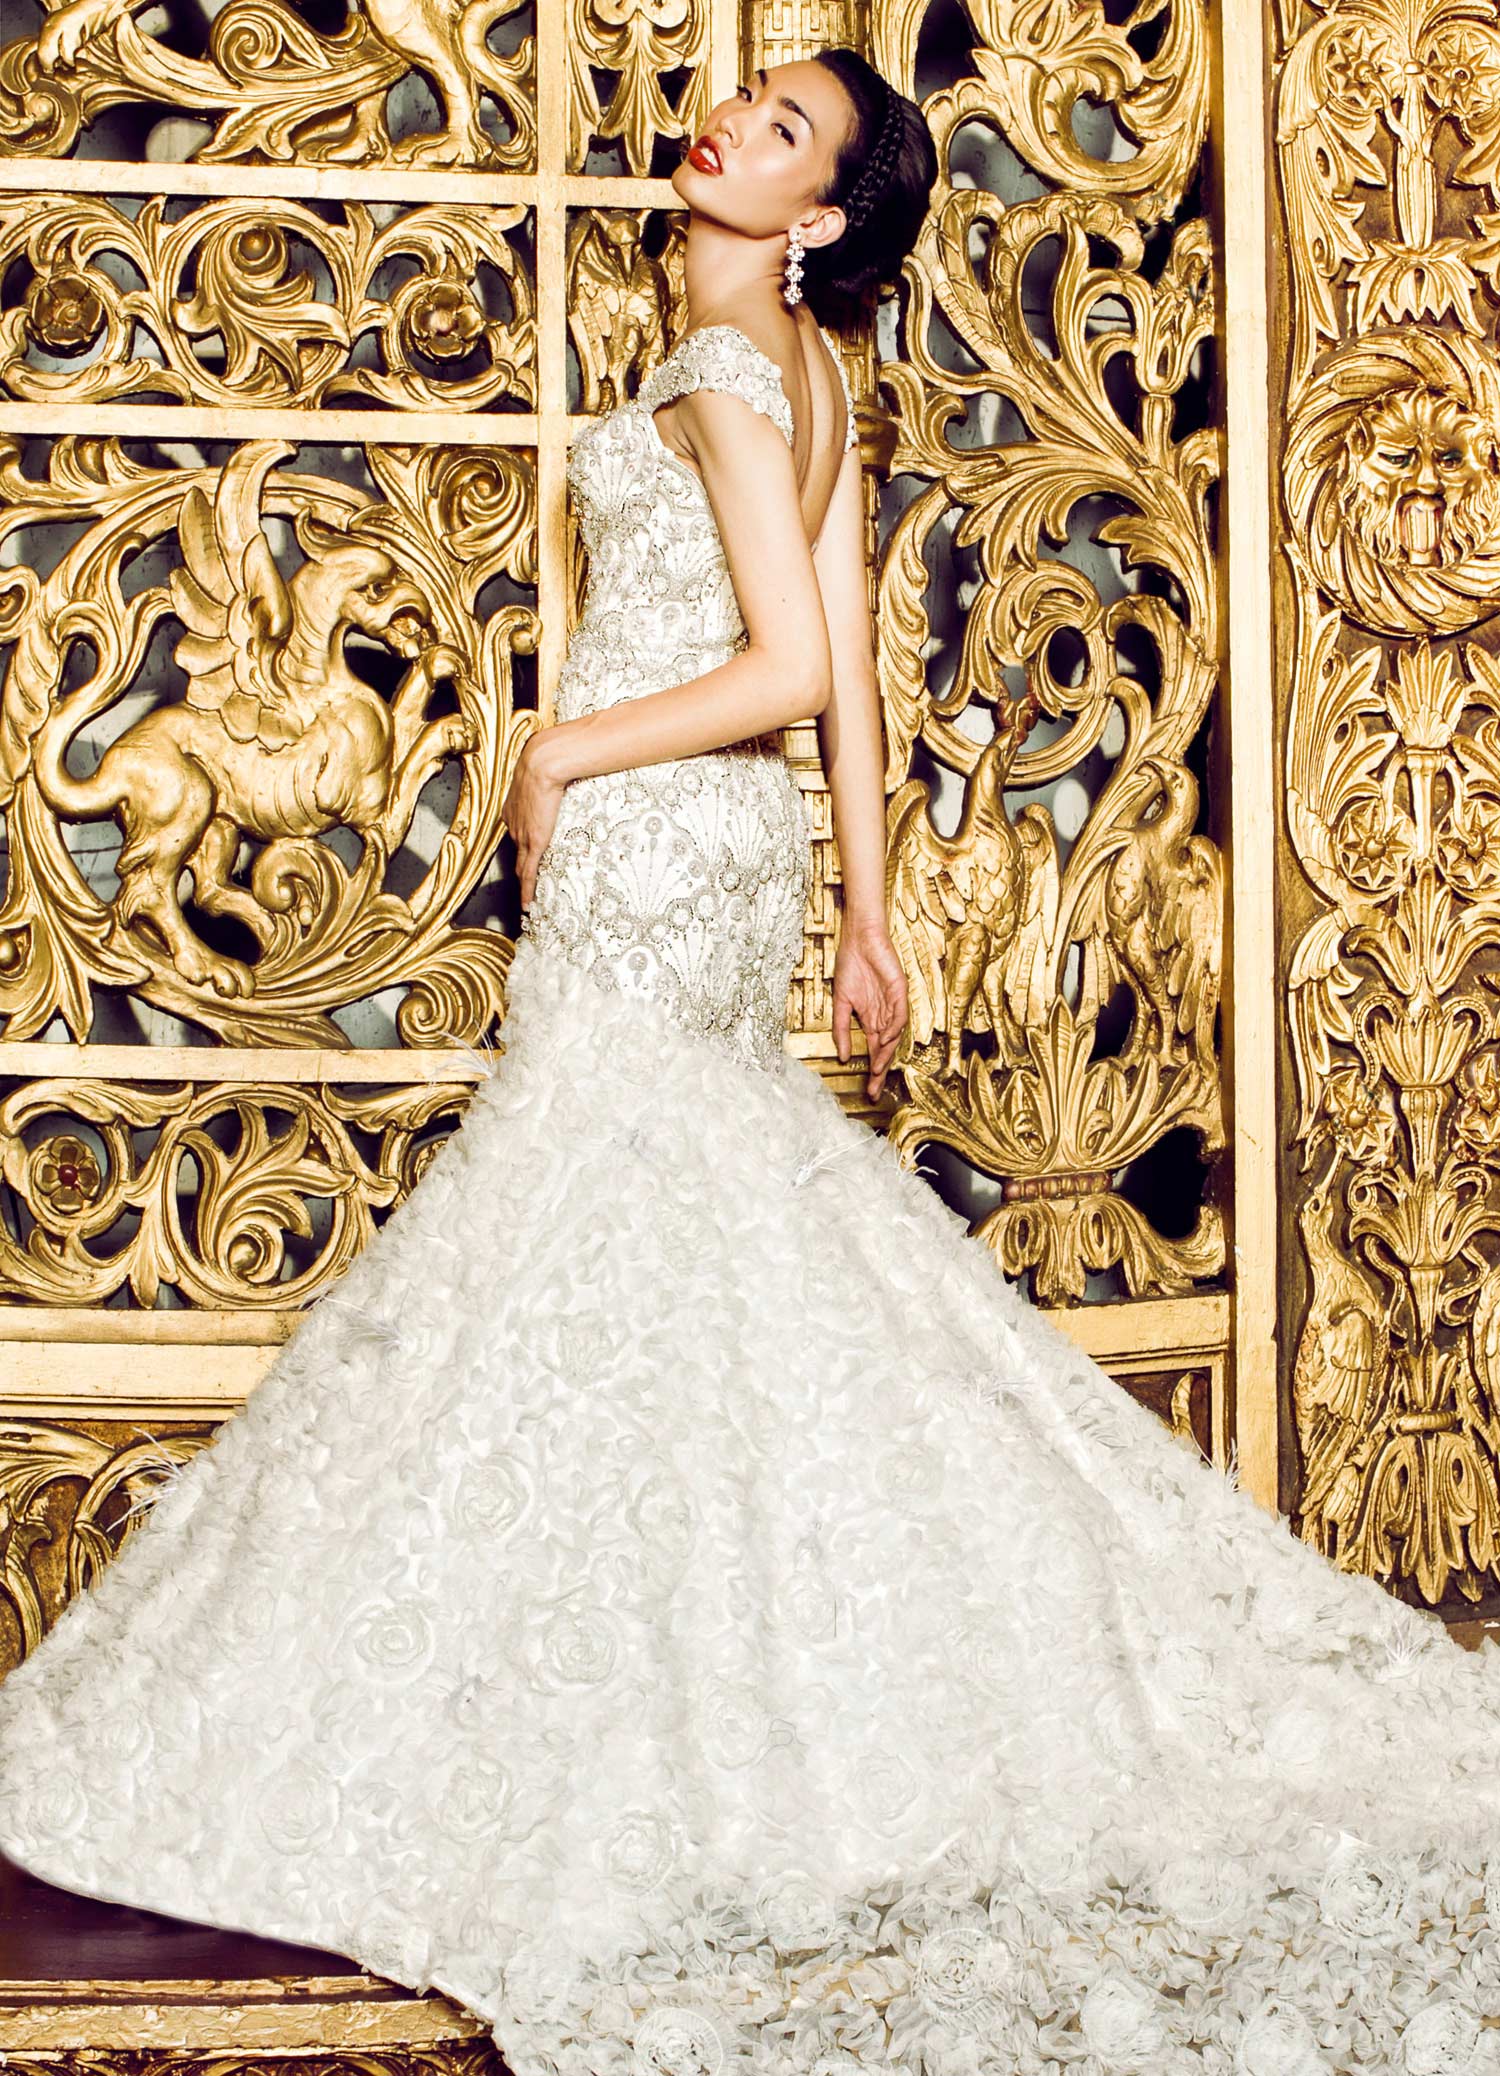 21 Incredibly Beautiful Wedding Dresses